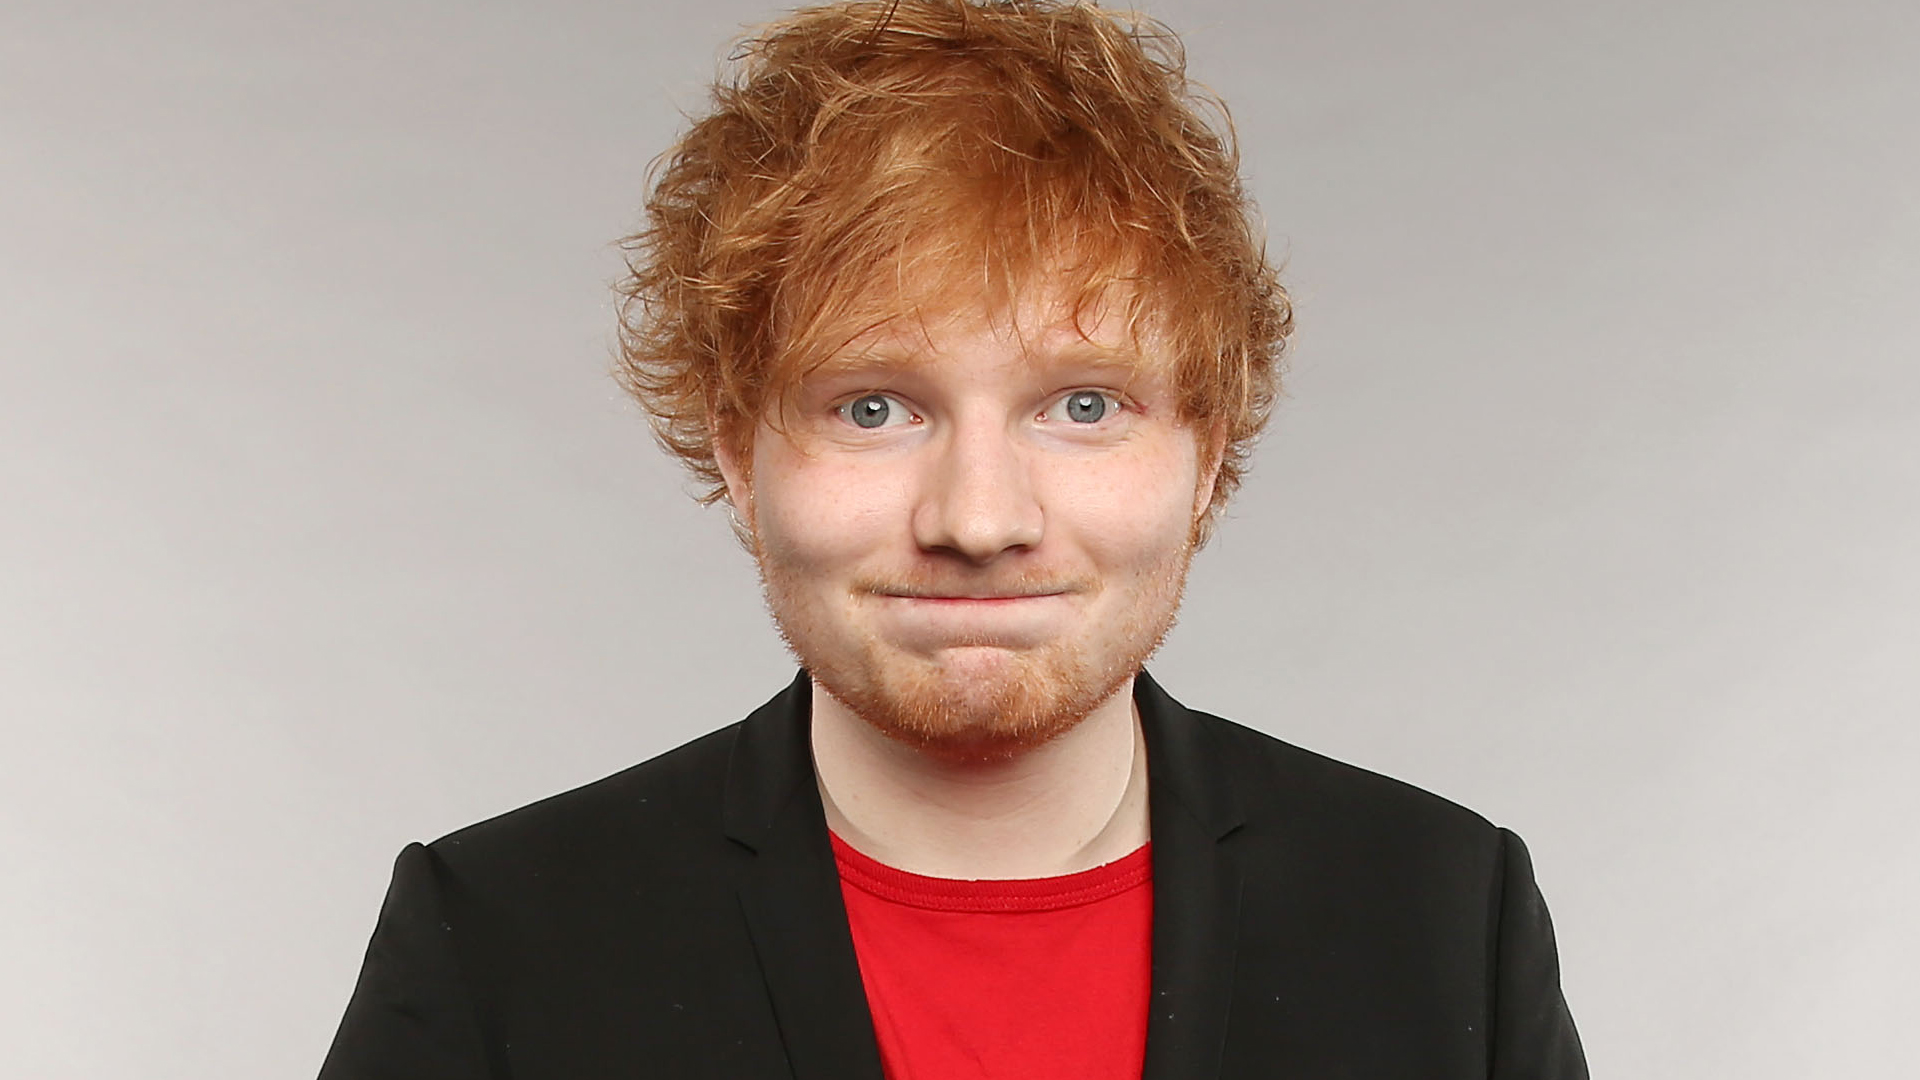 Ed Sheeran Backgrounds on Wallpapers Vista